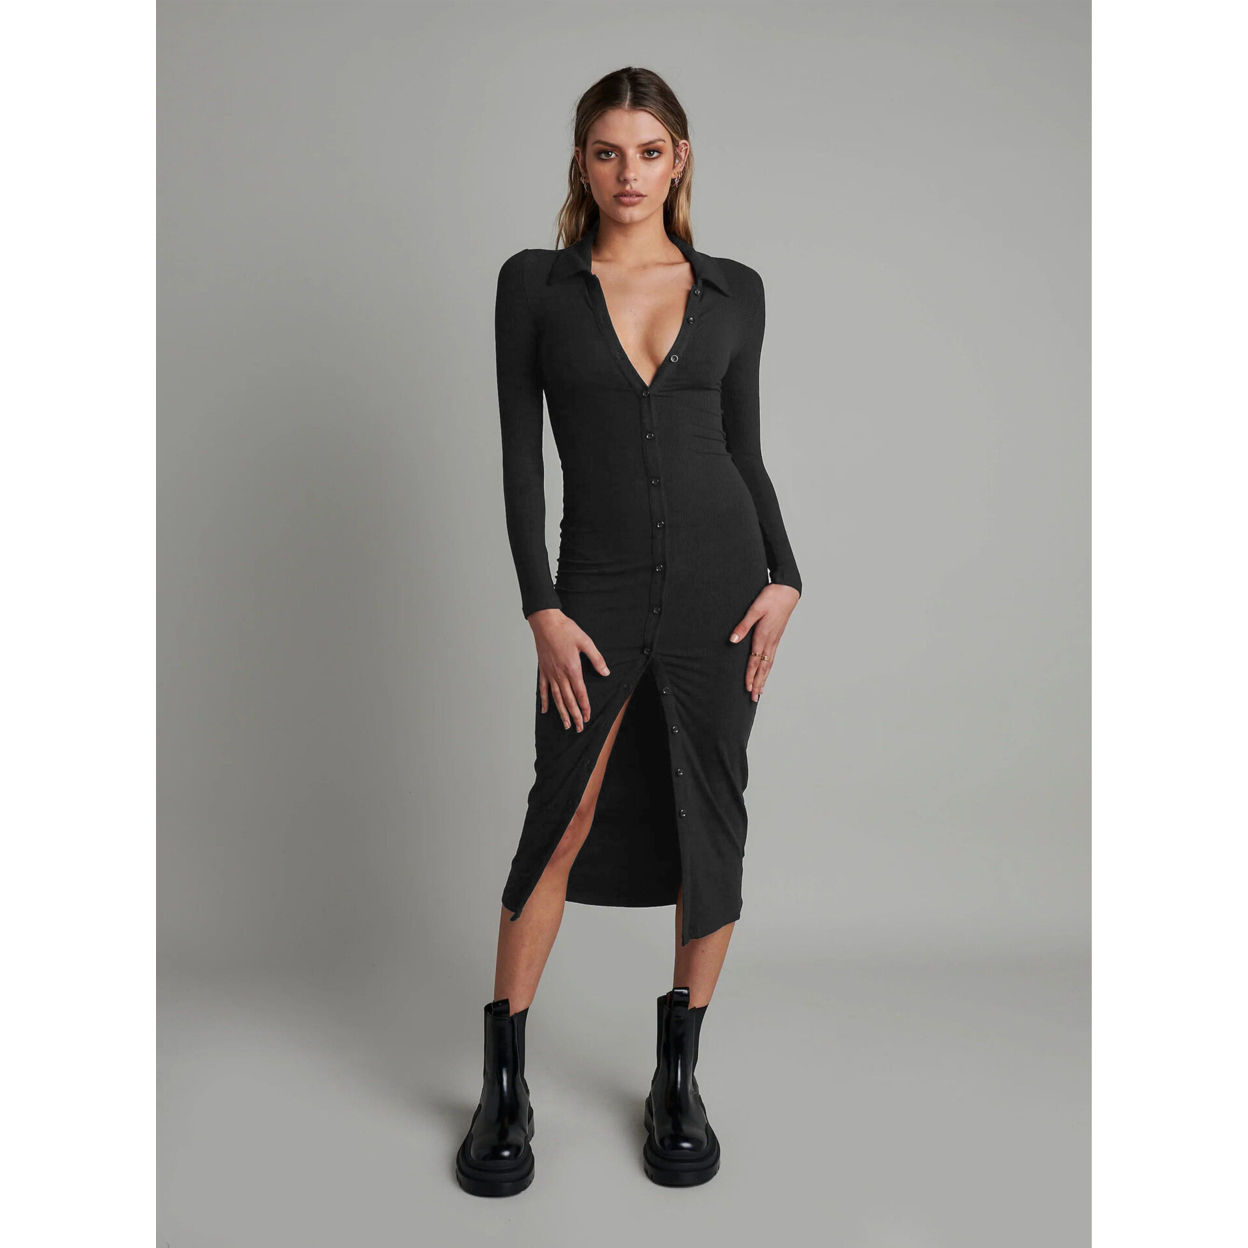 Sexy Fashion Cardigan Long Sleeve Shirt Skirt Women's Long Dress - Black, L